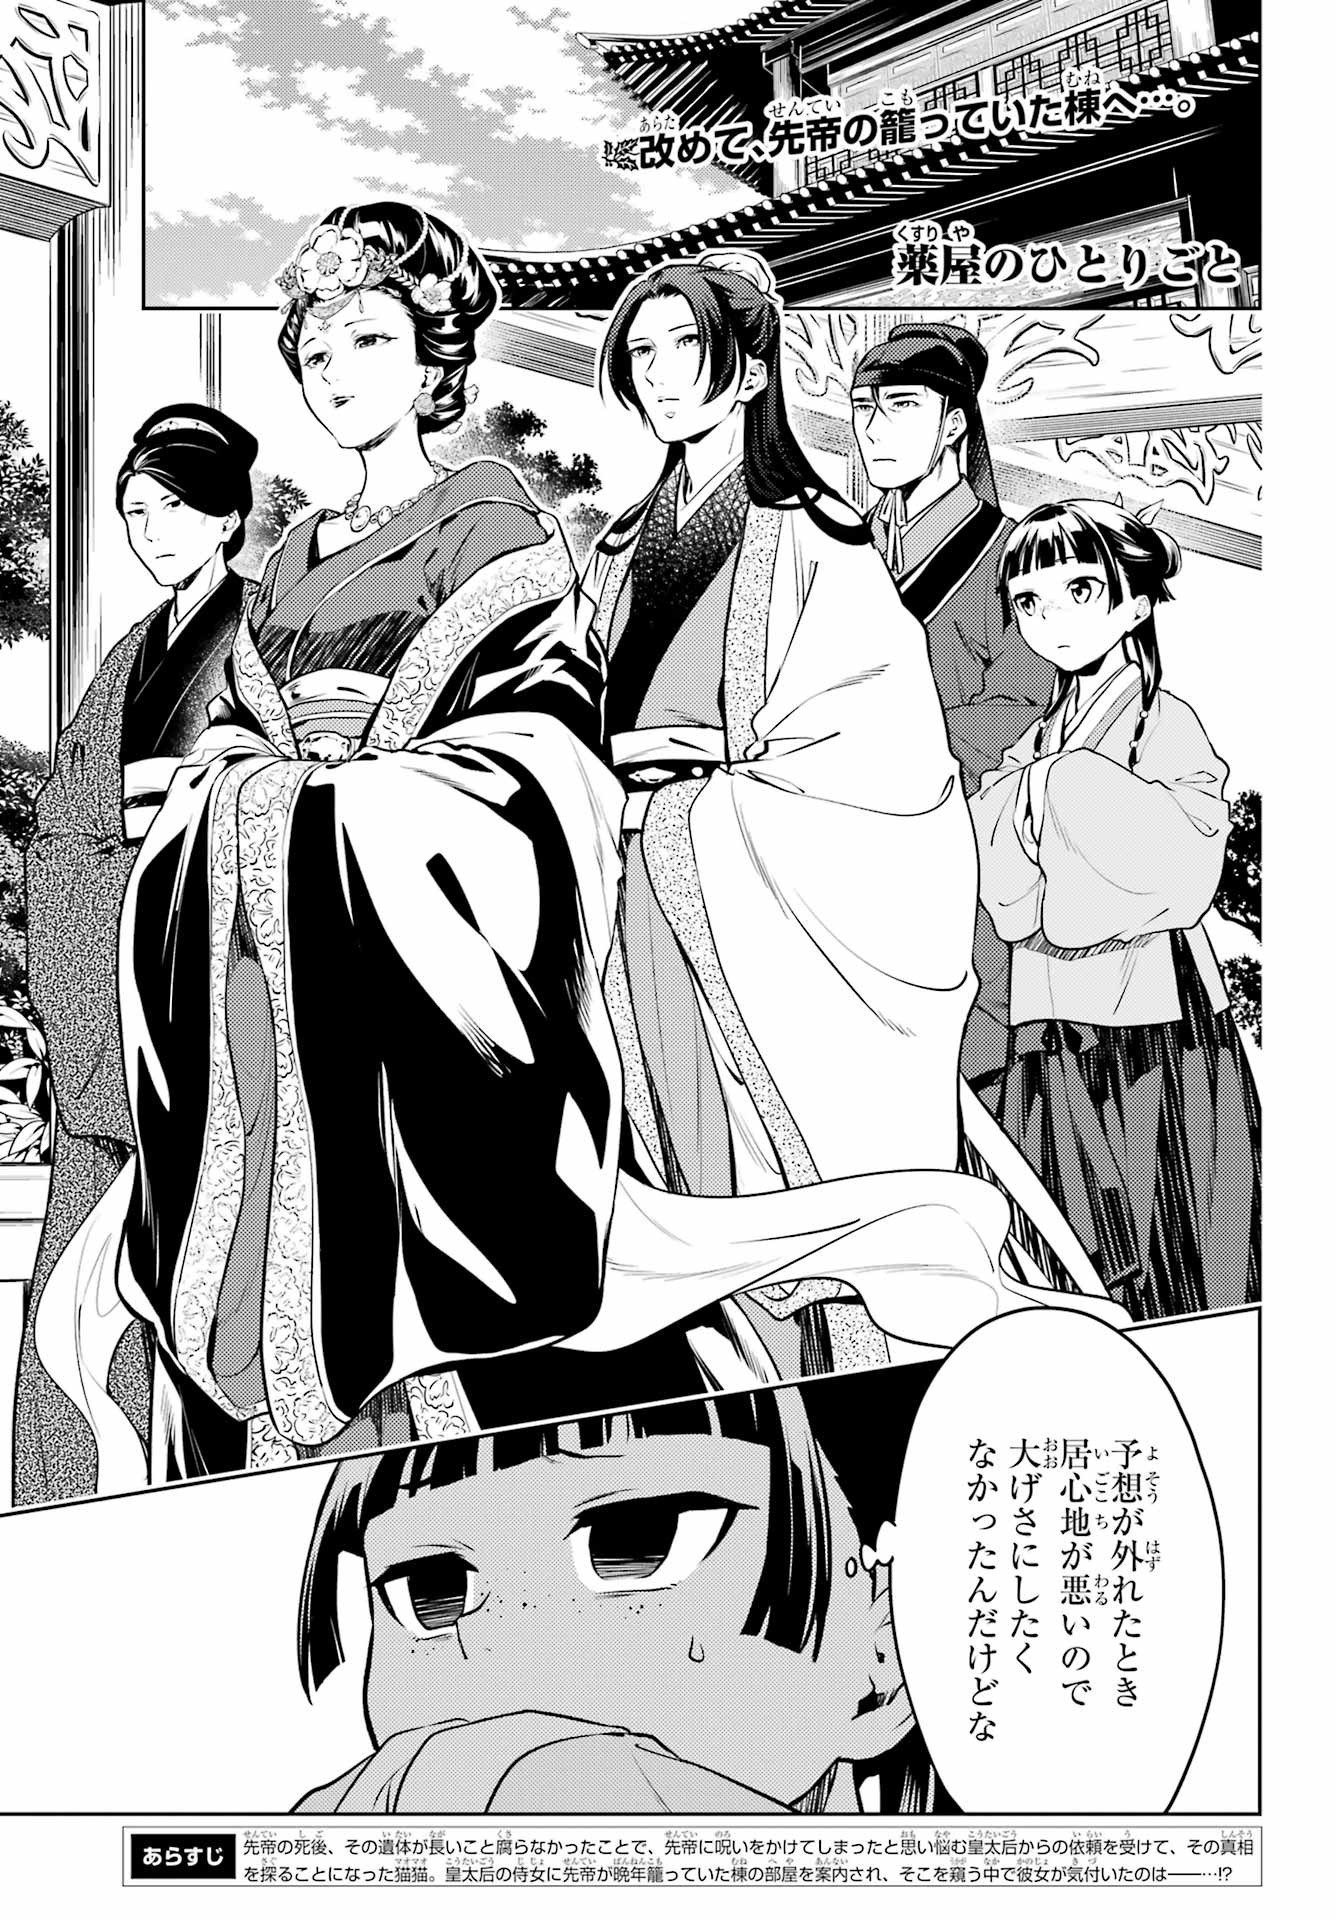 Kusuriya no Hitorigoto - Chapter 57 - Page 1